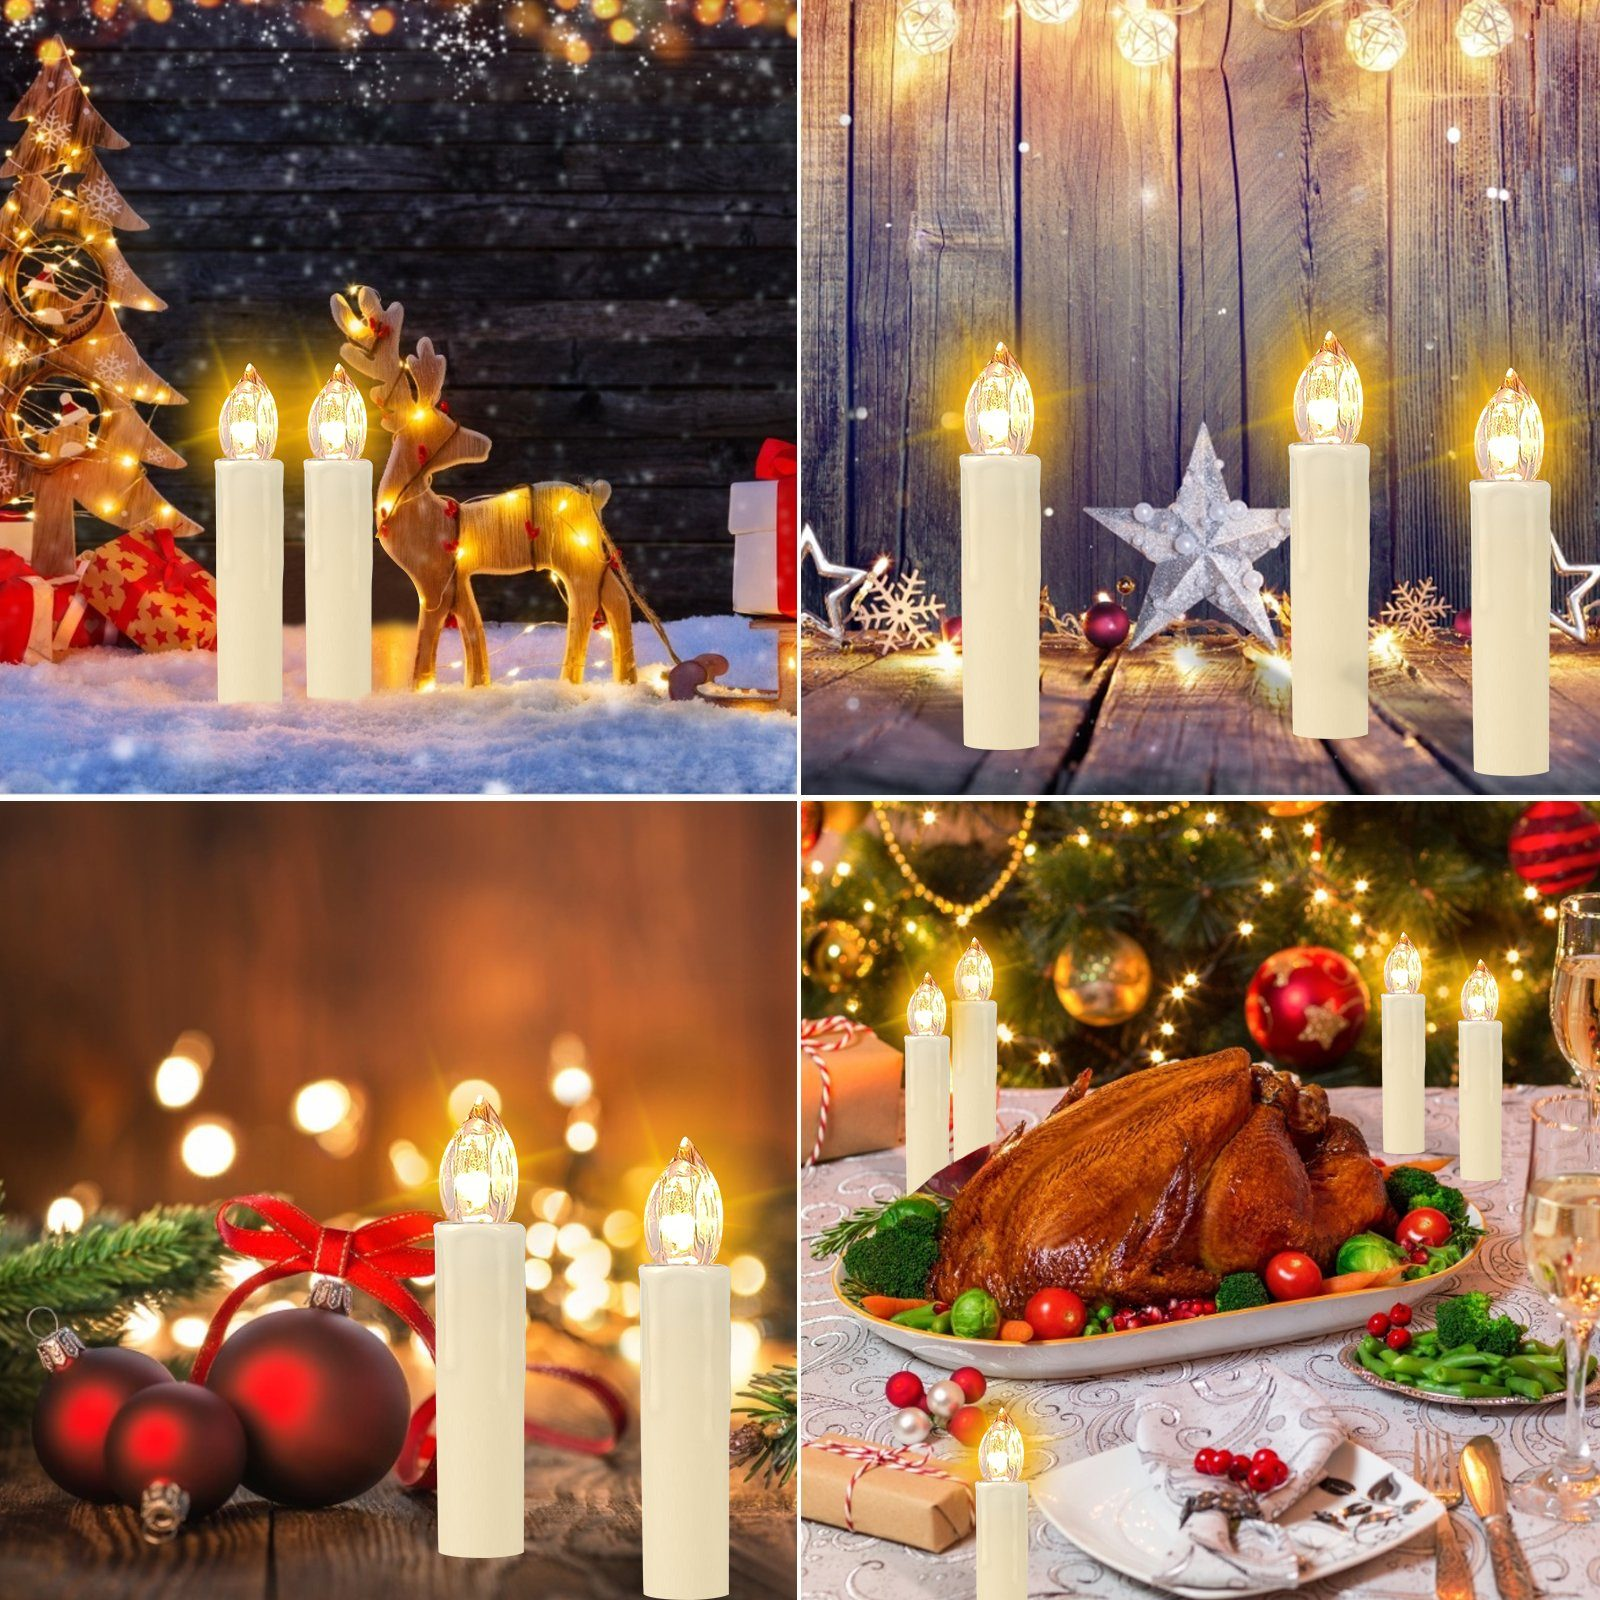 GOTOLL CH050-B 50 Beige Weihnachtskerzen, kabellose LED LED-Kerze Creme